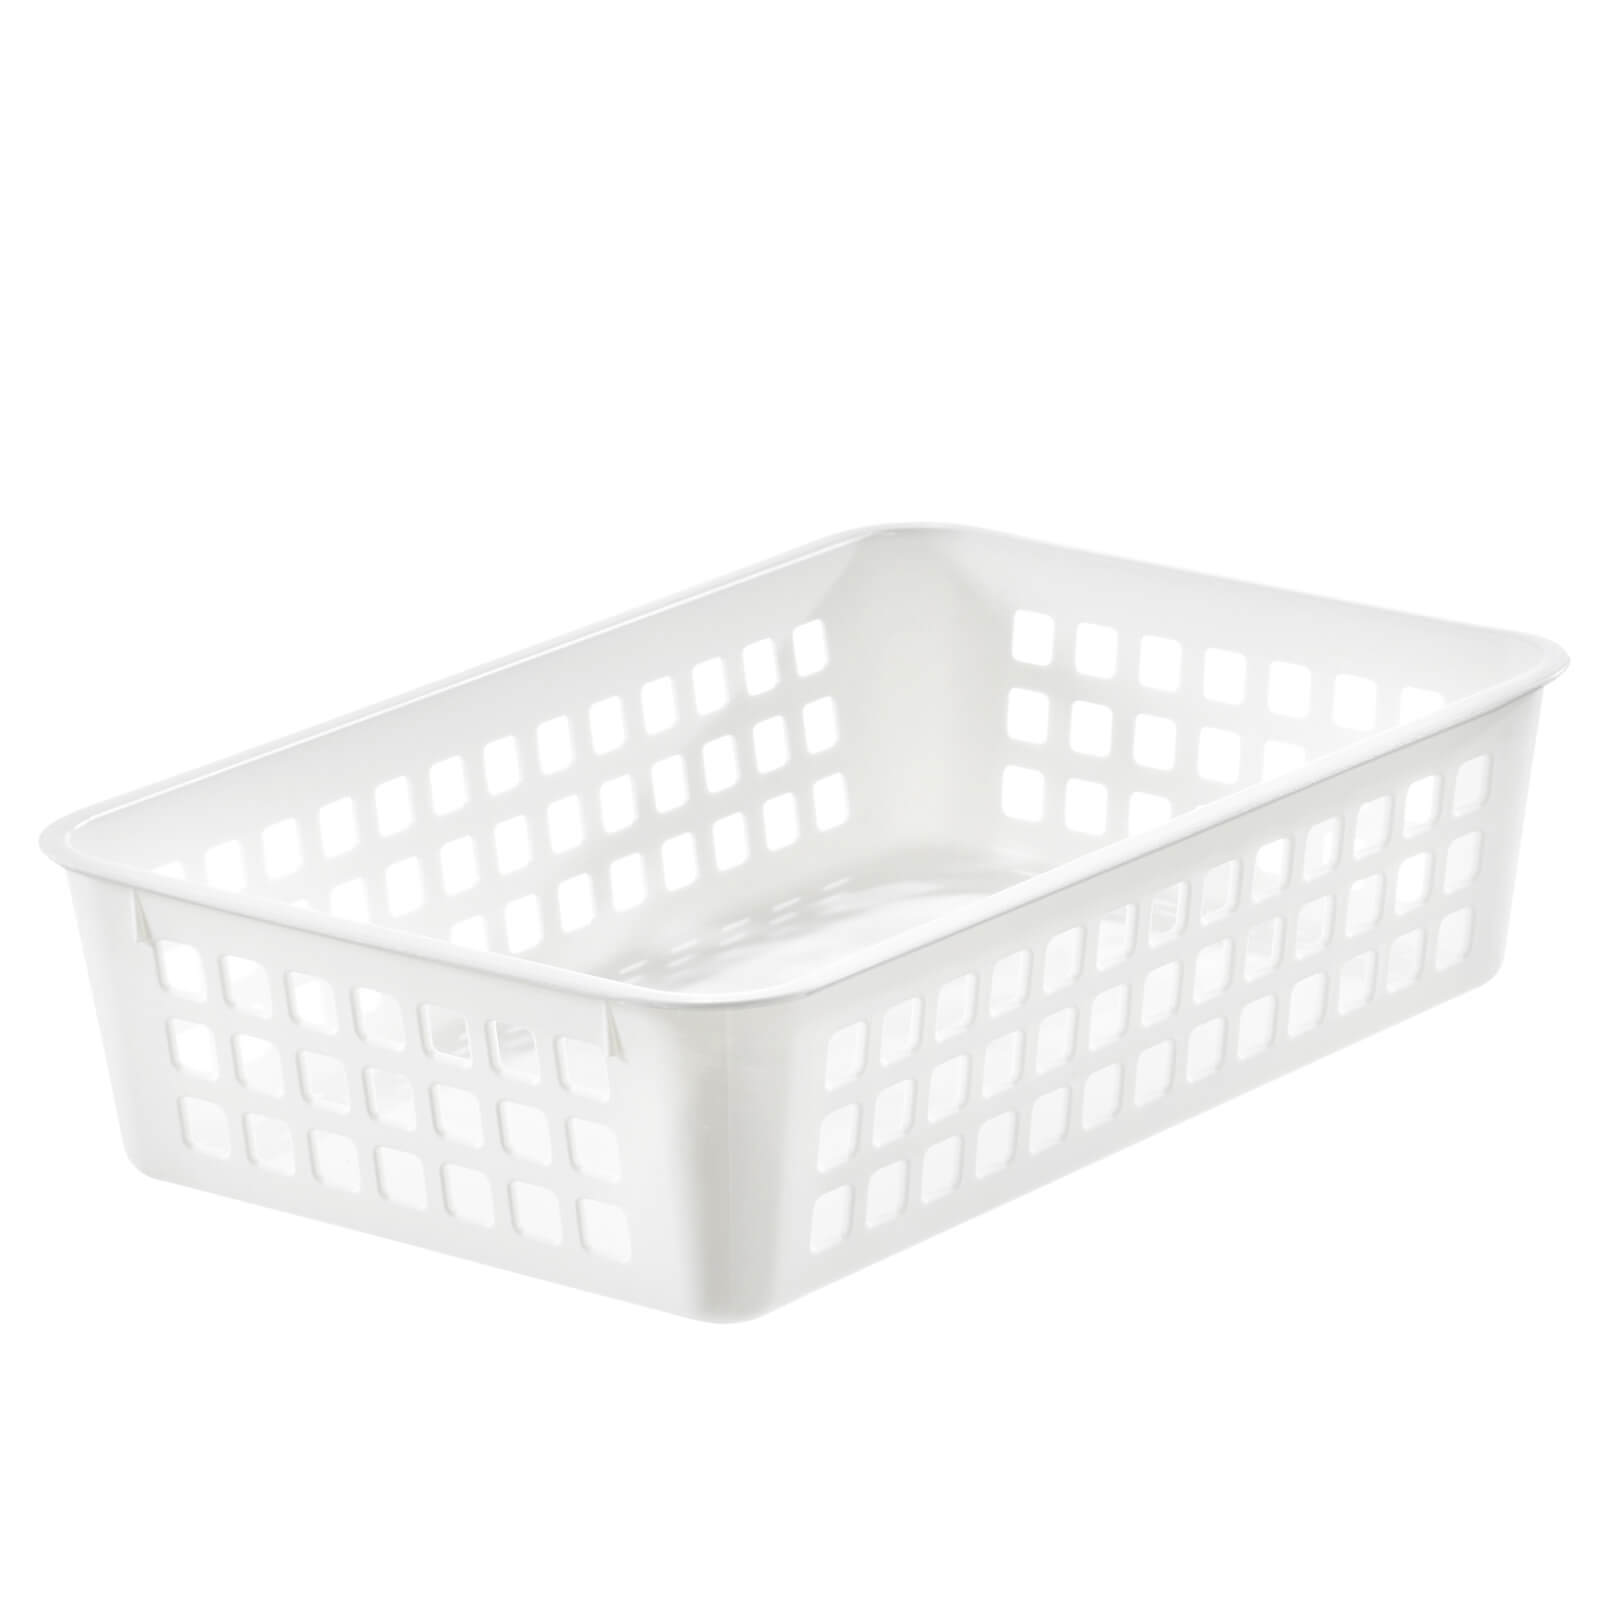 Photo of Smartstore 2l Wardrobe Basket - White